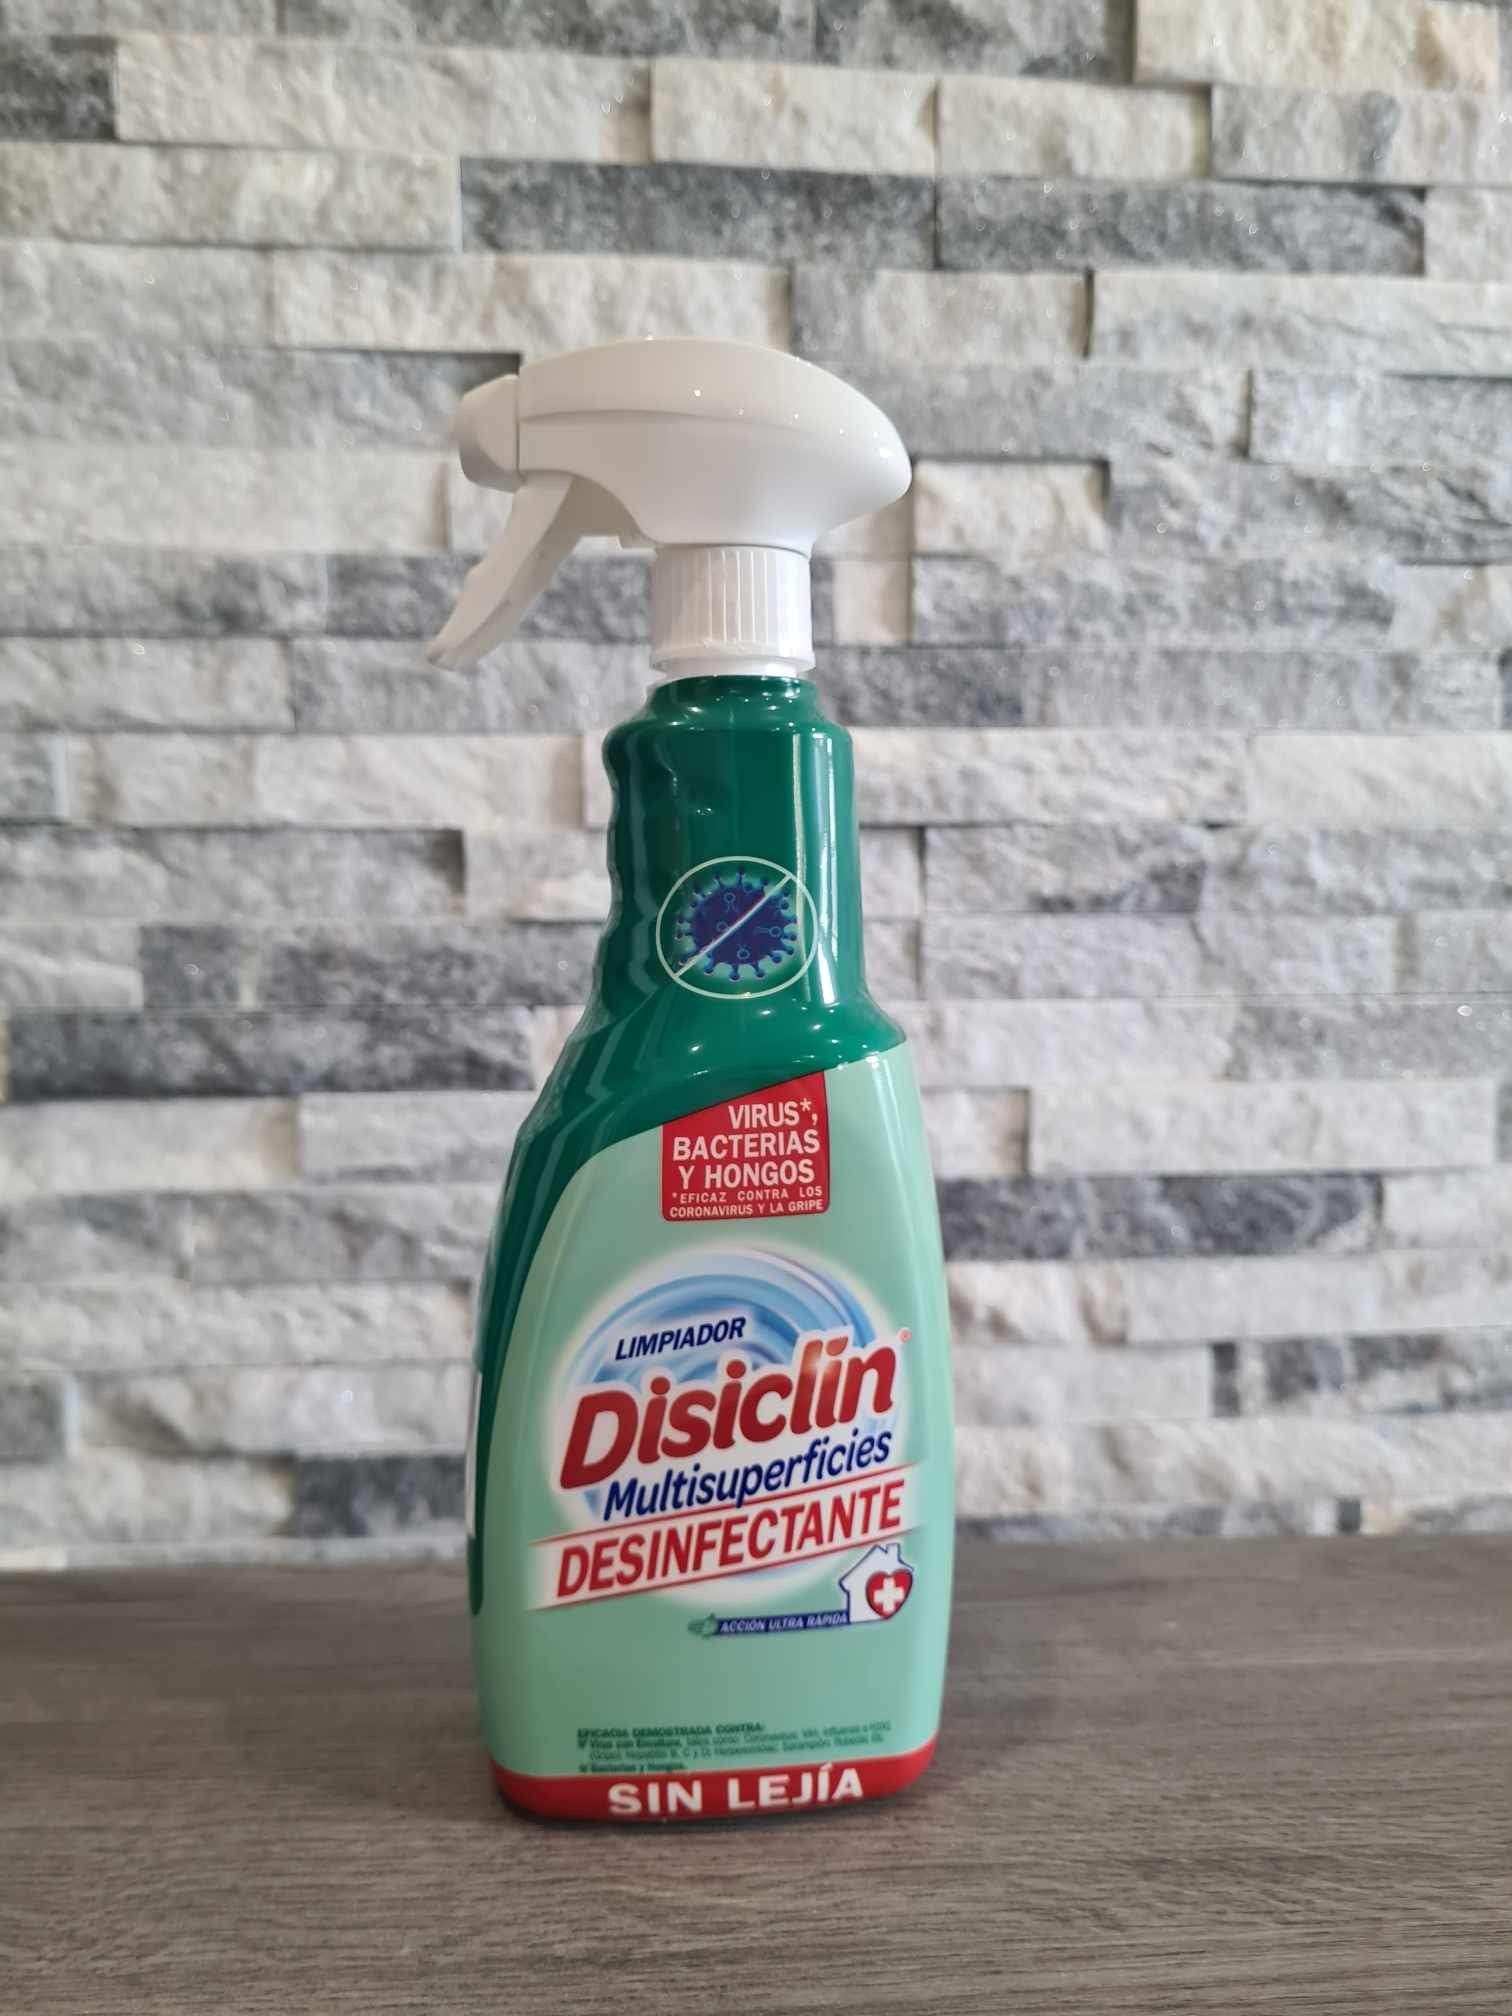 Disiclin Multi-Purpose Disinfectant Spray – Spanish kleen freaks